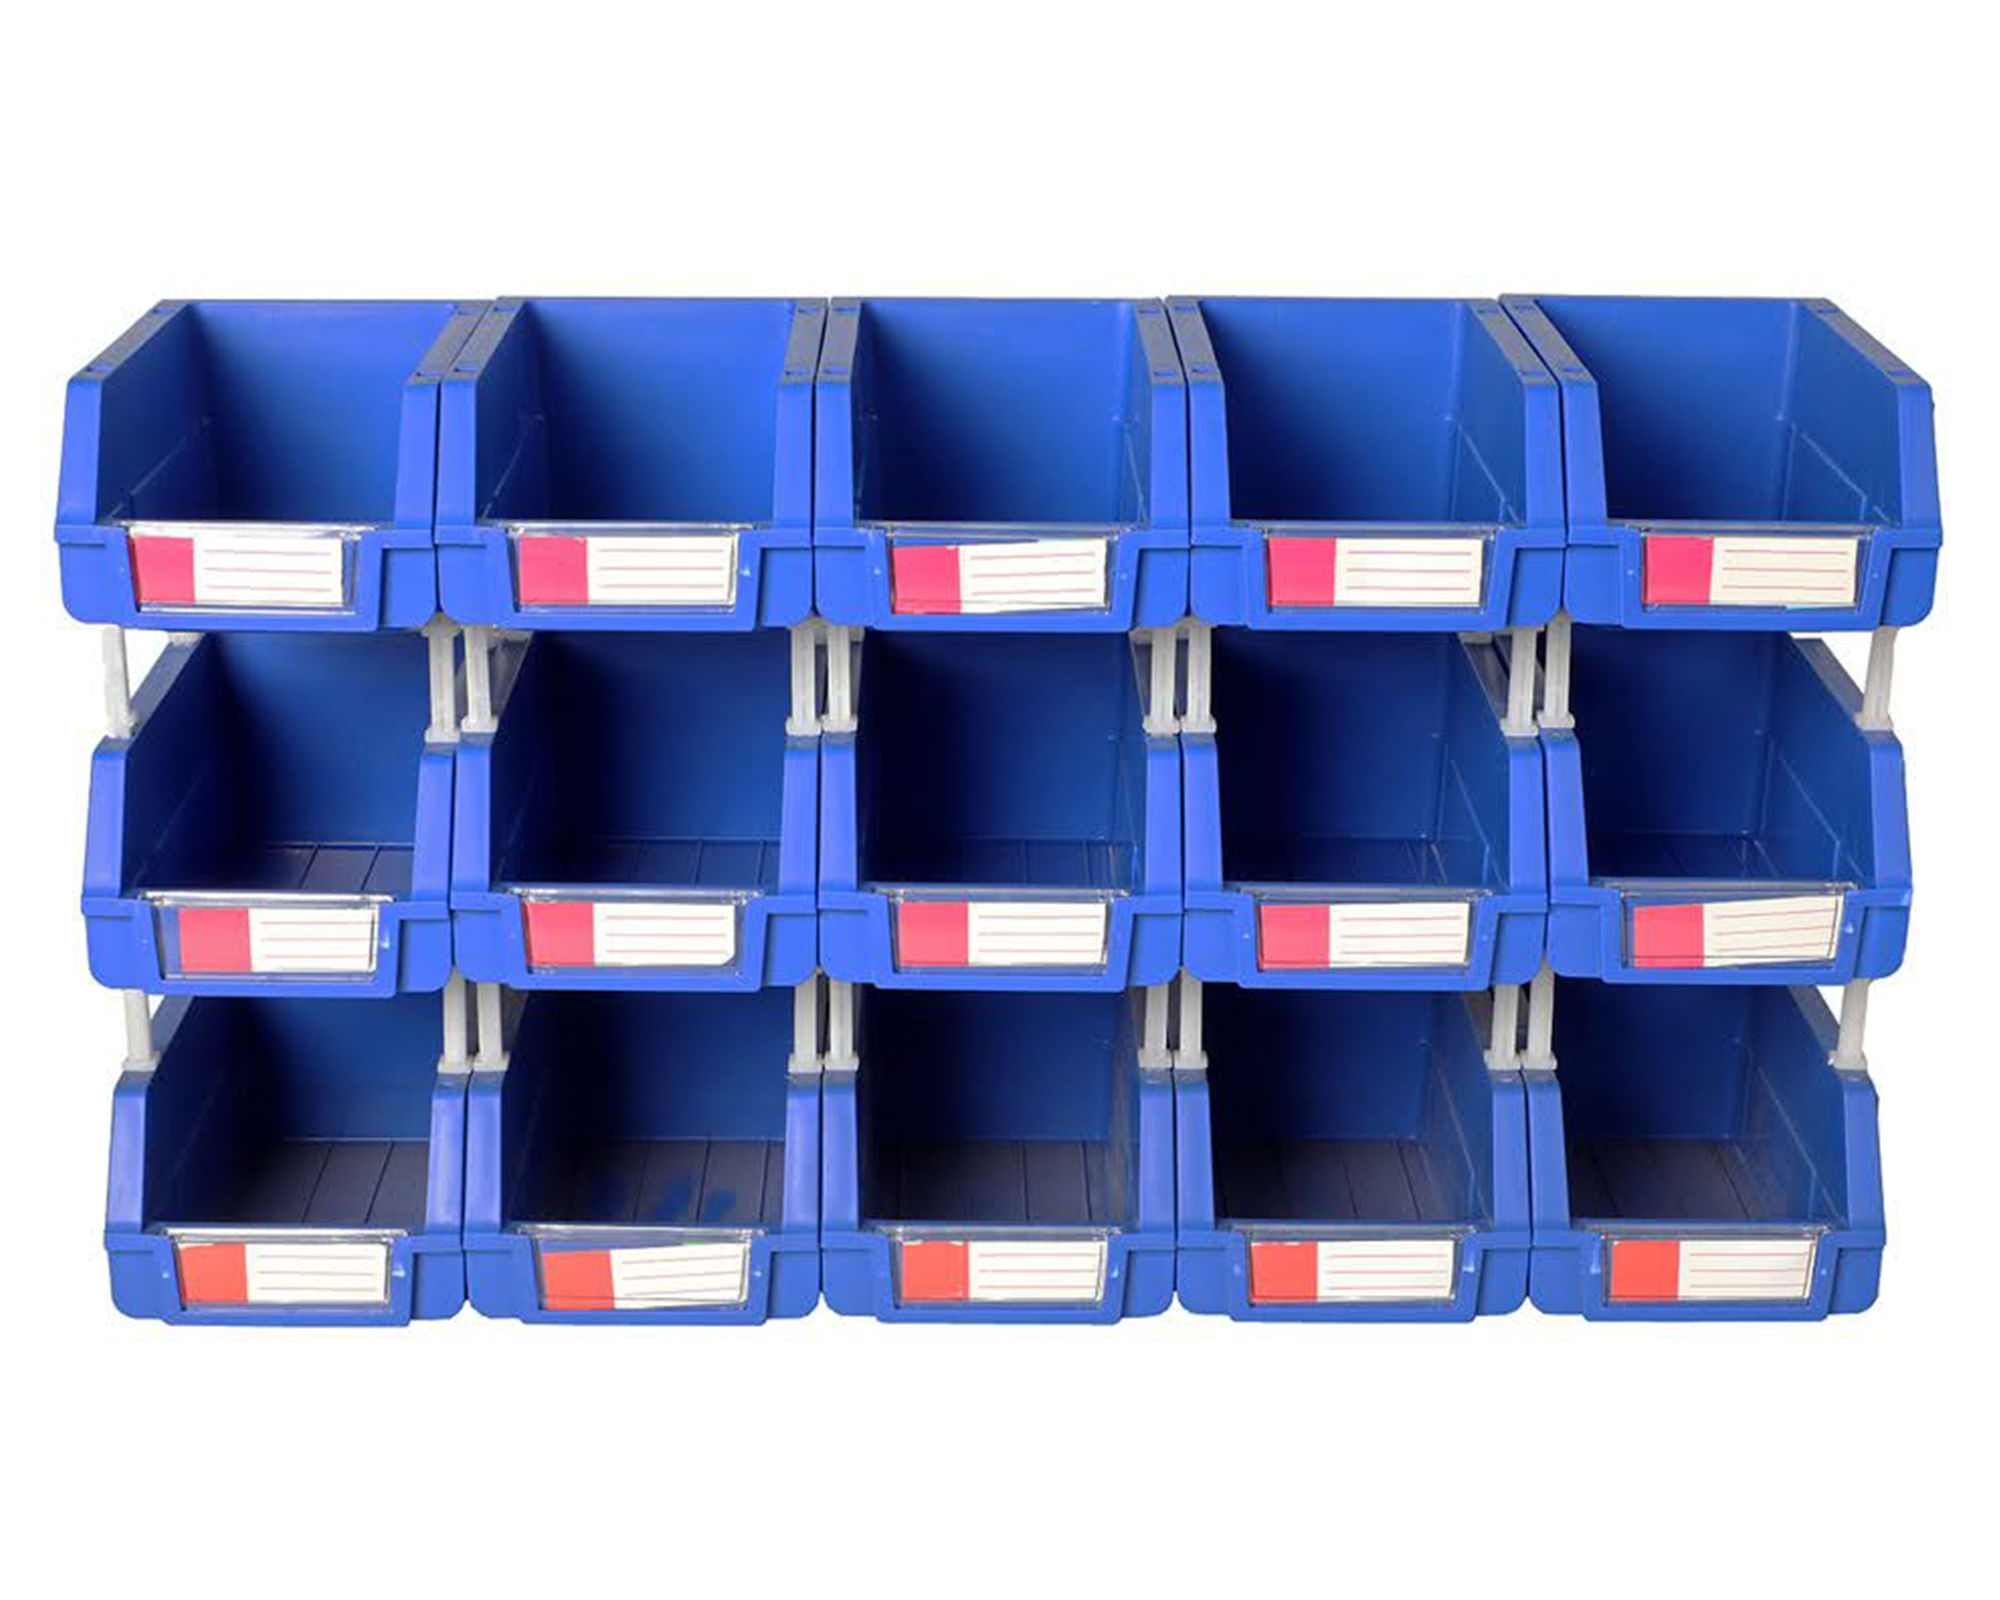 Caja Clasificadora (azul) 5007279, Otros